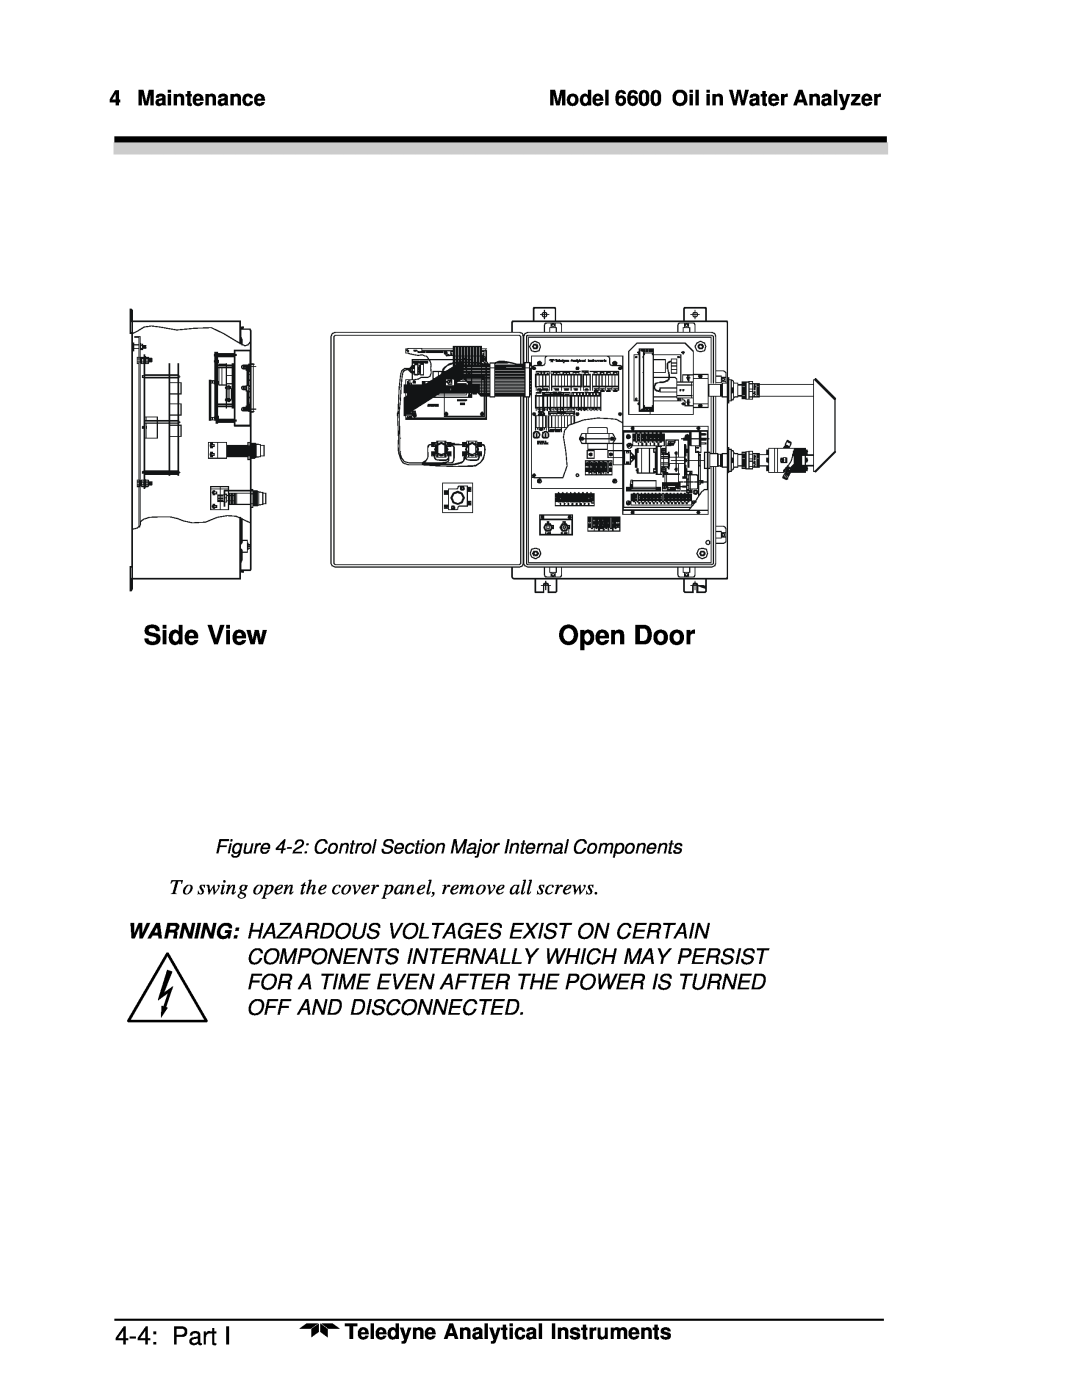 Teledyne Side View, Open Door, 4-4:Part, Maintenance, Model 6600 Oil in Water Analyzer, Teledyne Analytical Instruments 